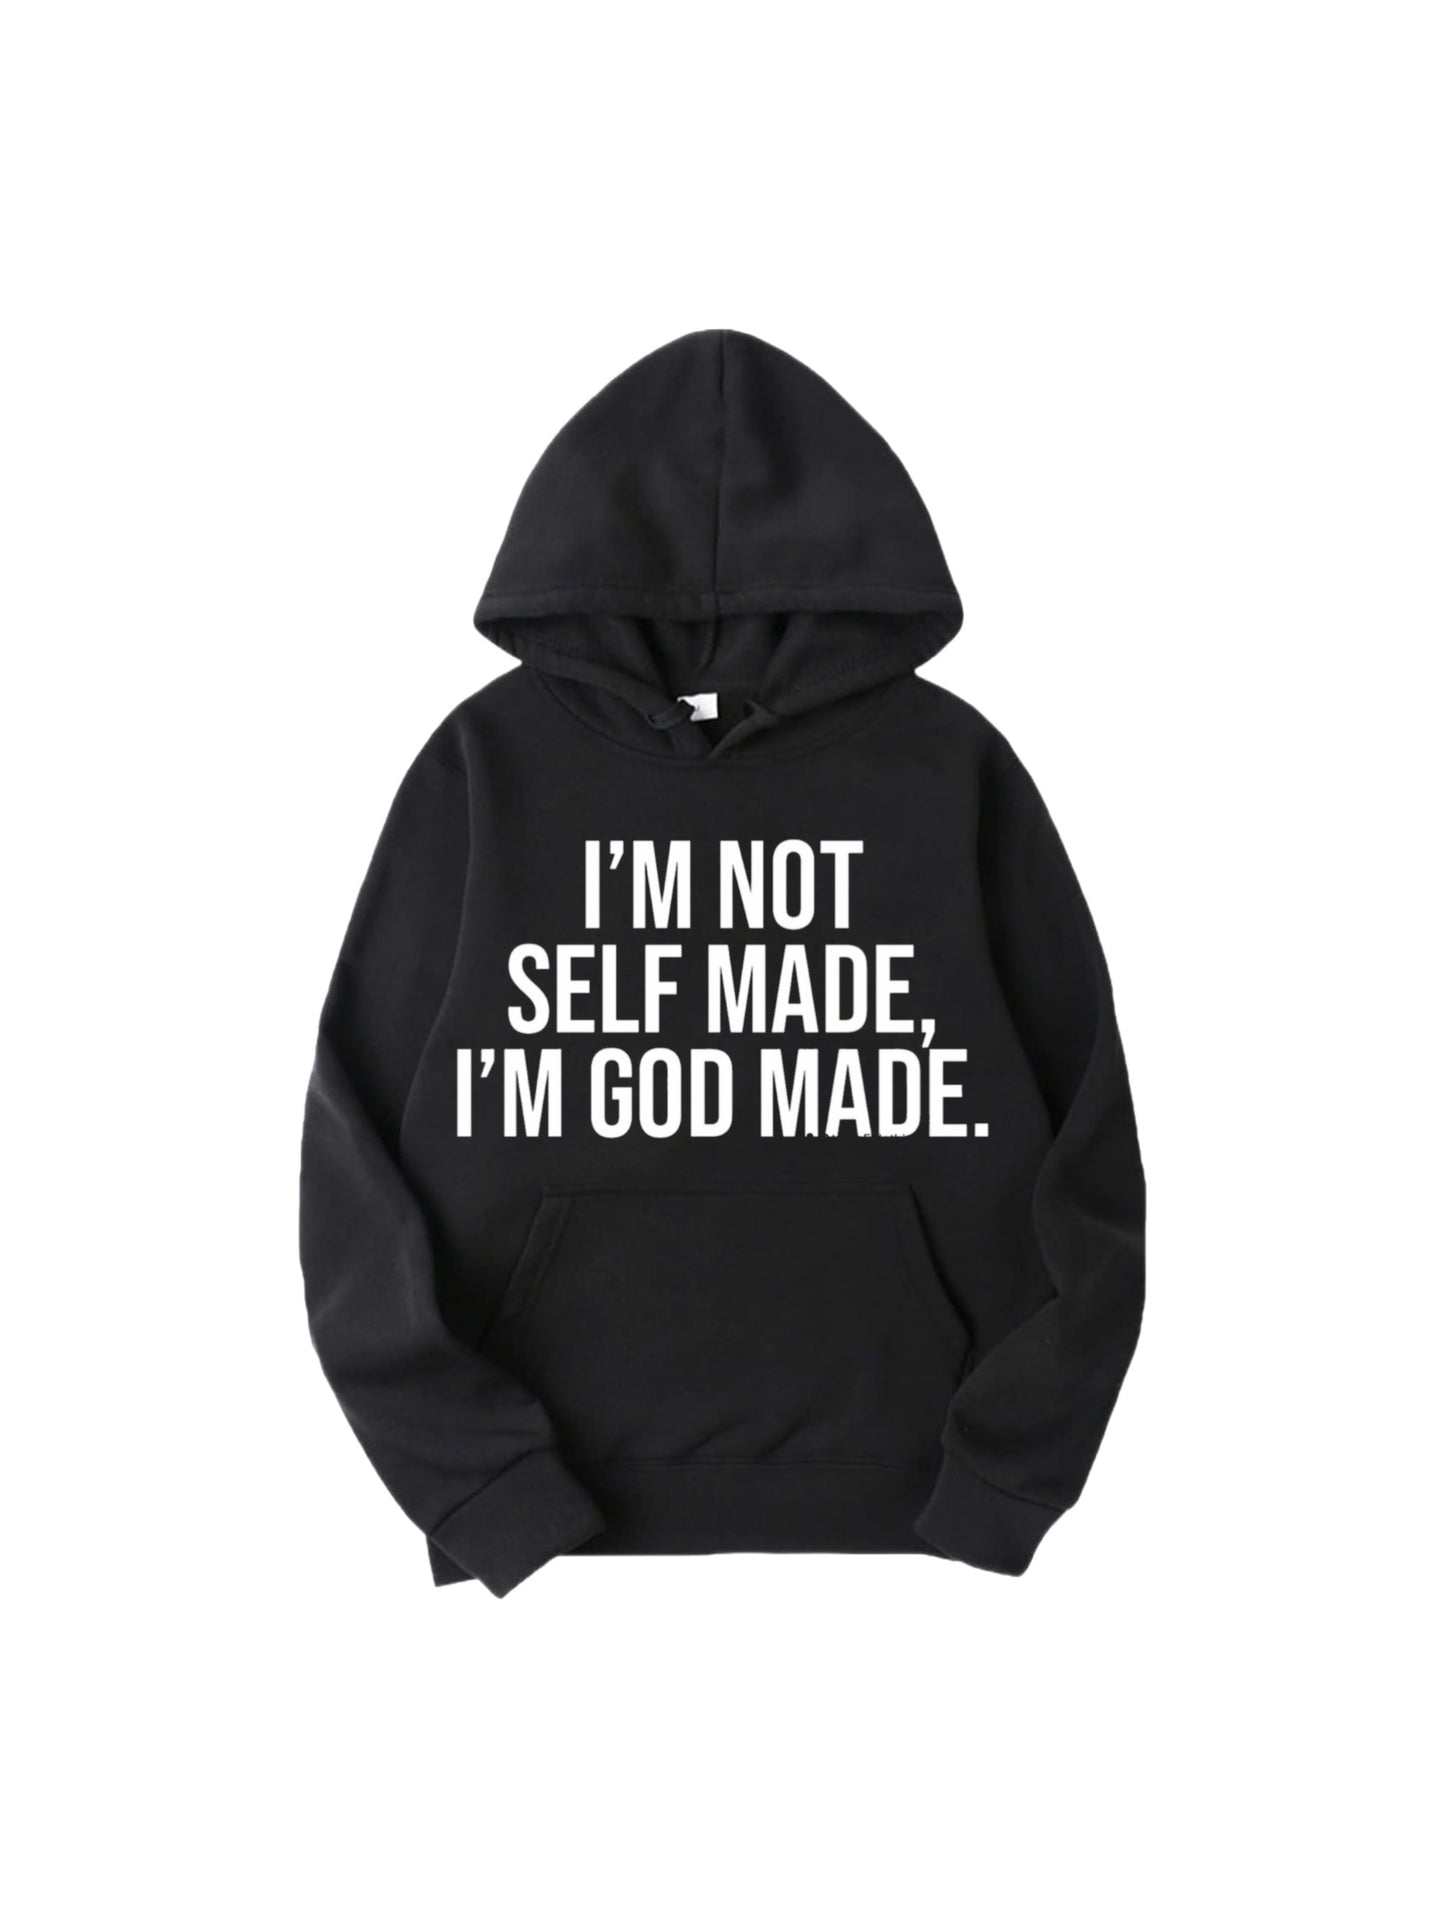 Self Made God Made Hoodies